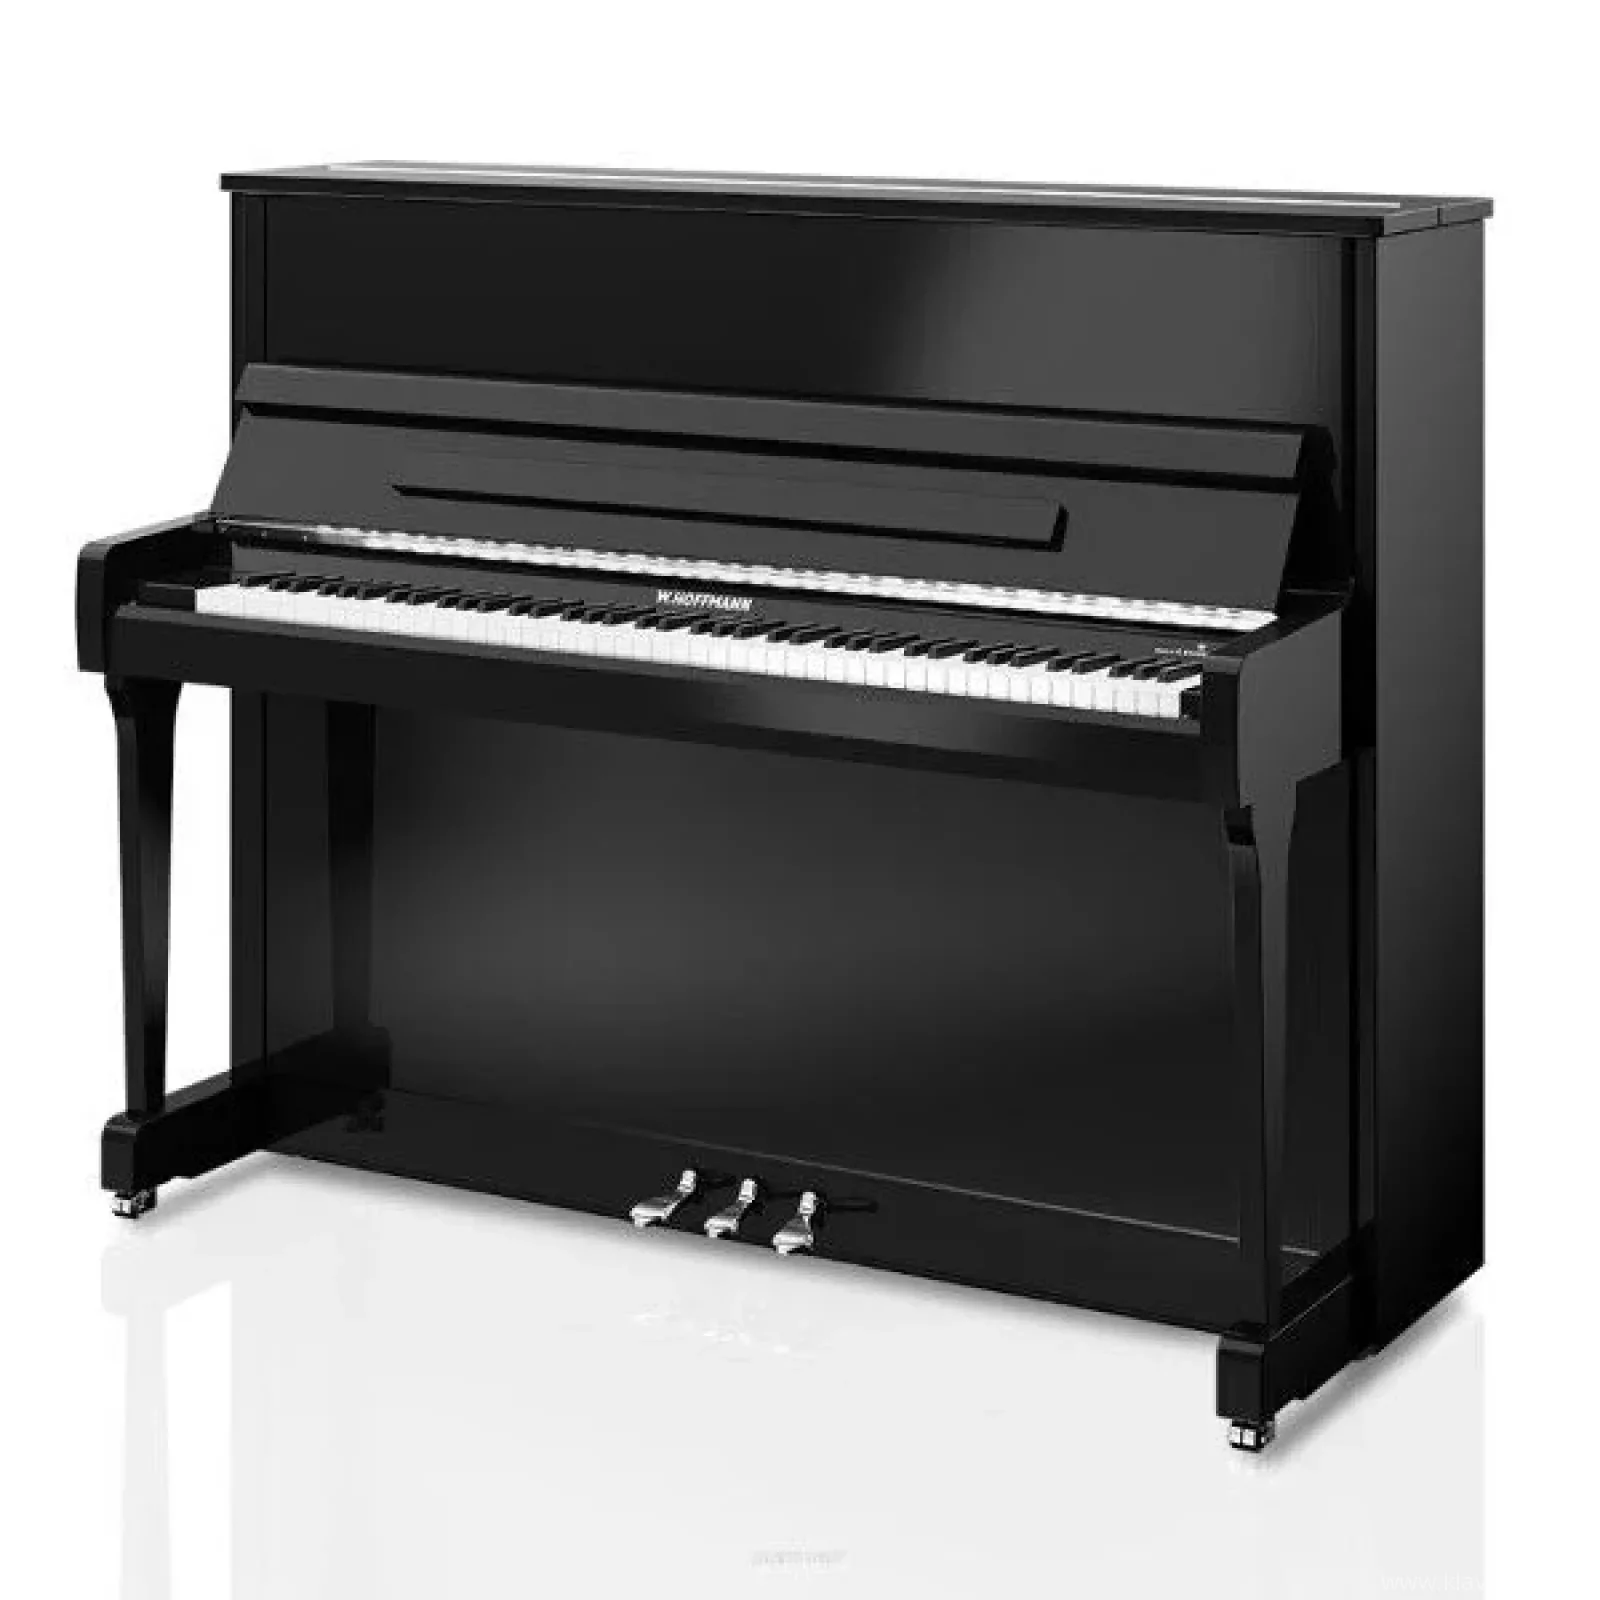 W. Hoffmann V-120 Chroom - nieuwe piano 120 cm